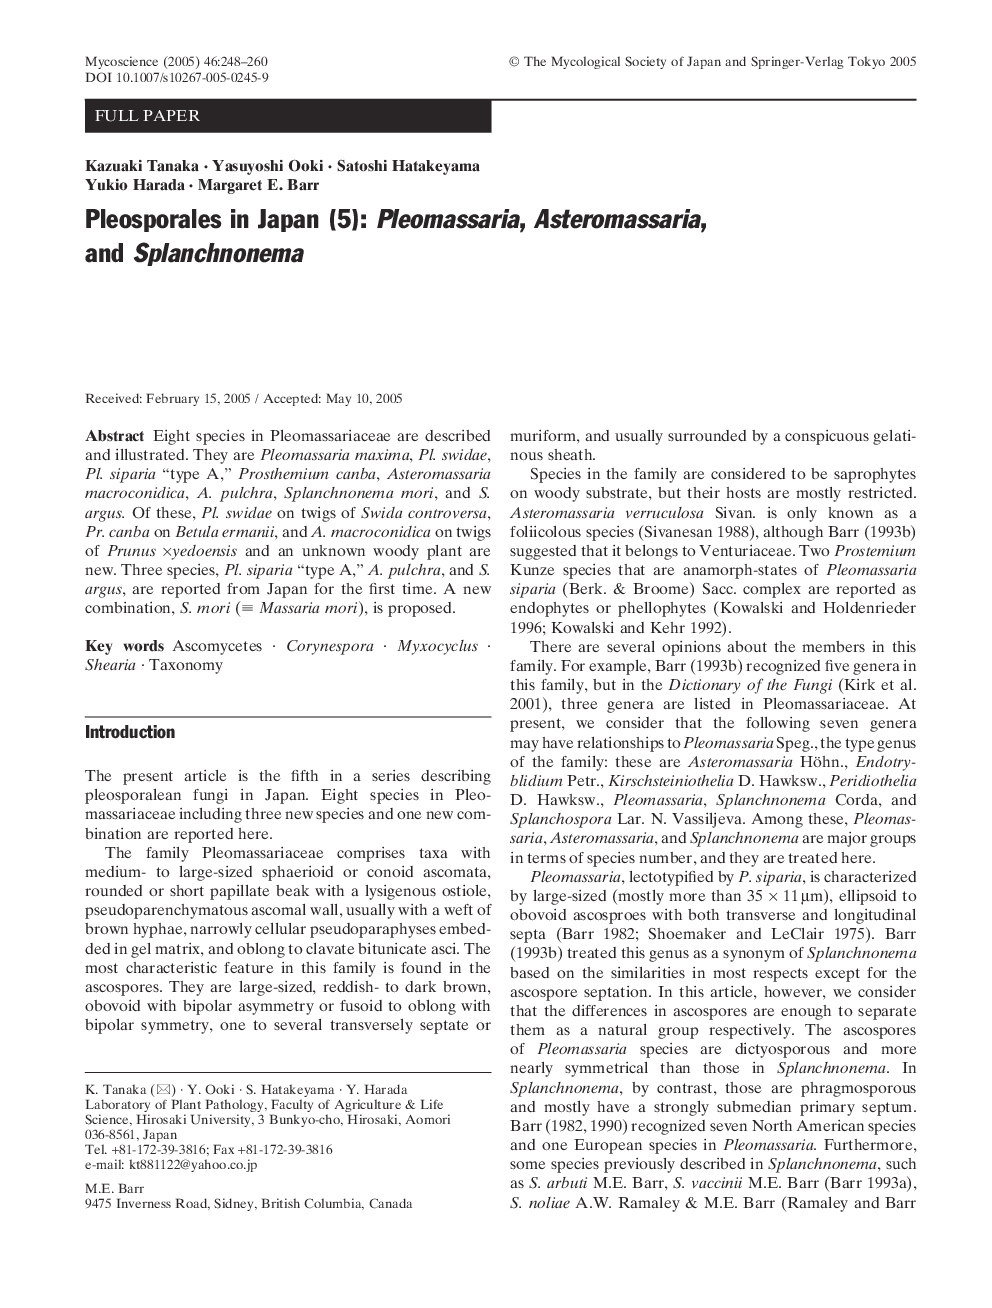 Pleosporales in Japan (5): Pleomassaria, Asteromassaria, and Splanchnonema